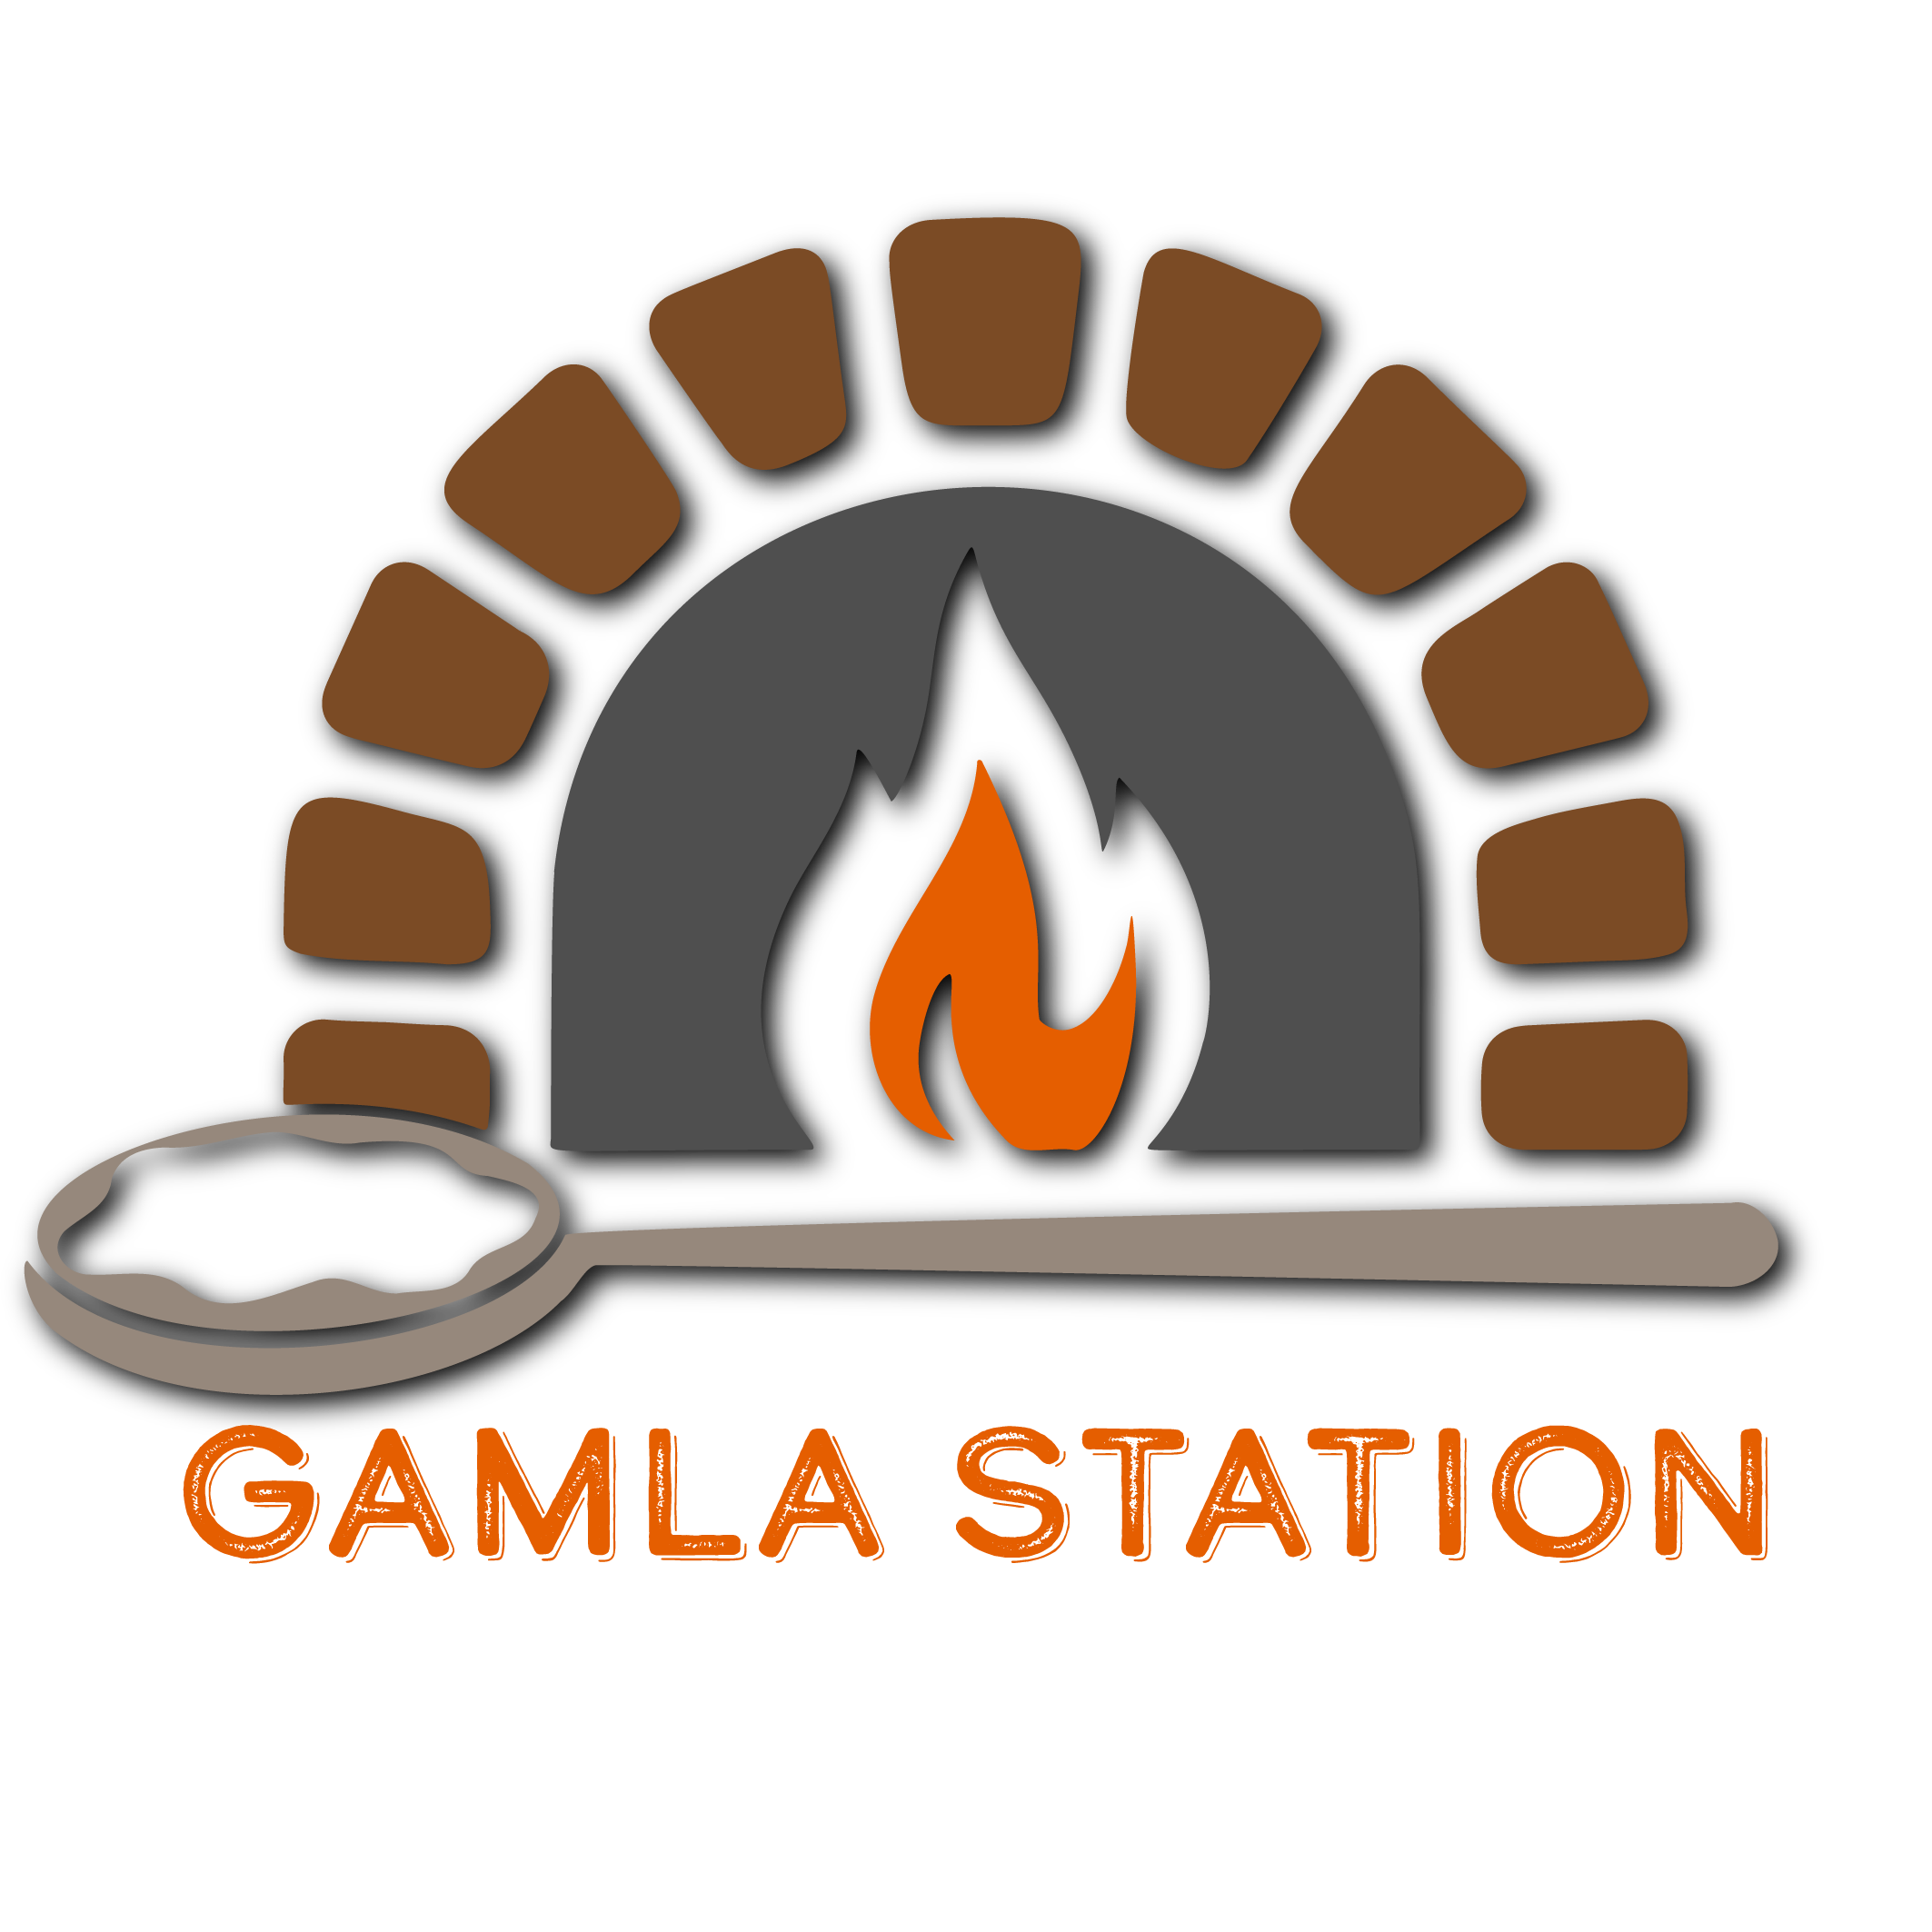 Gamla Stations Pizzeria & Kolgrill